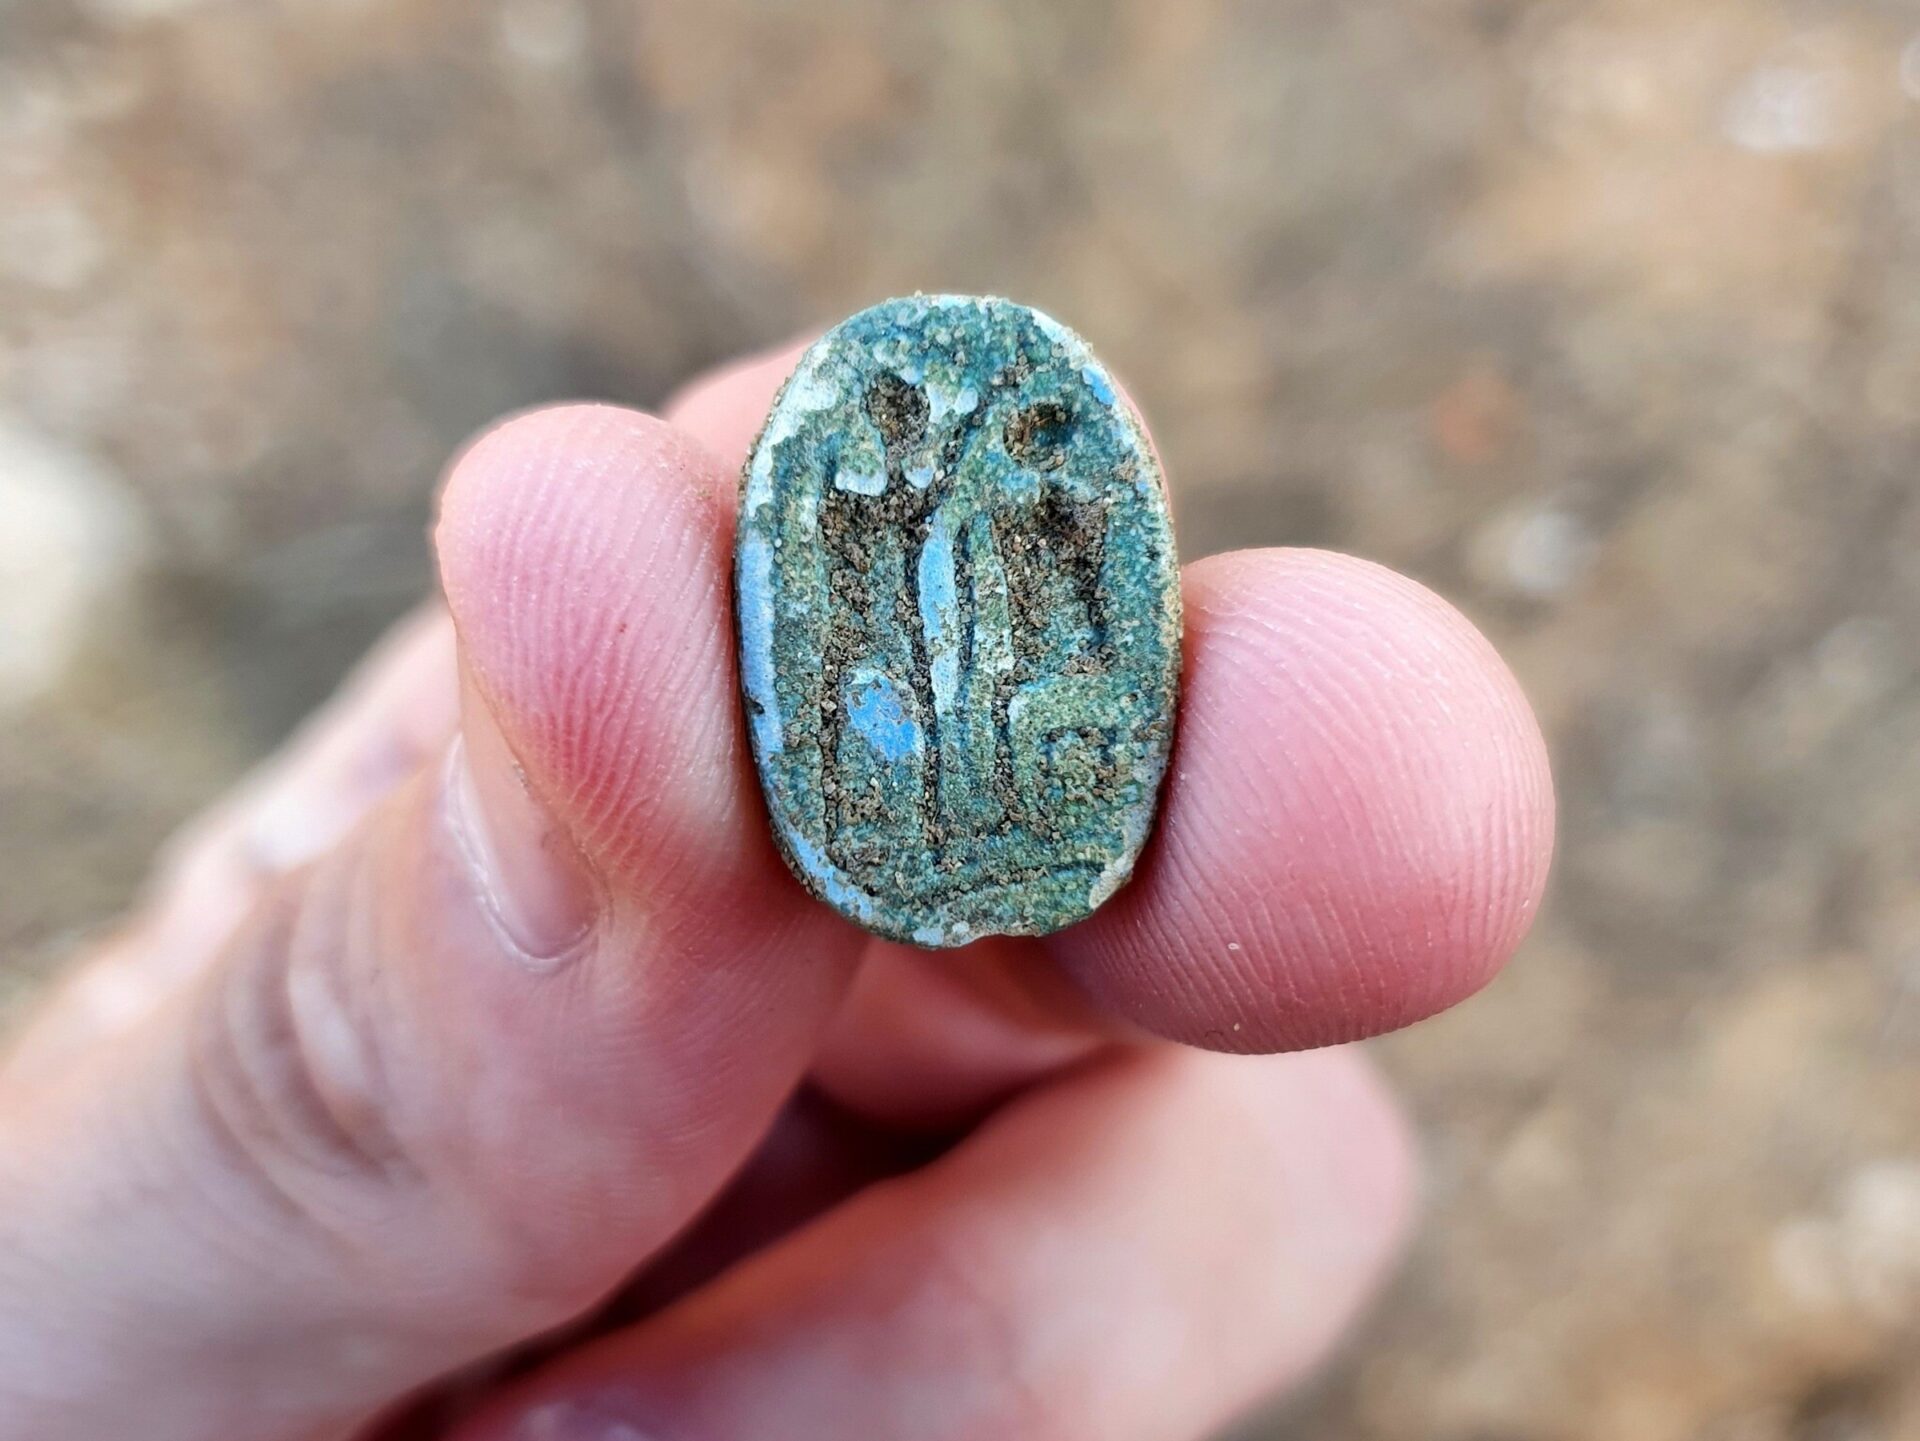 3,000-year-old scarab found in Israel during school field trip